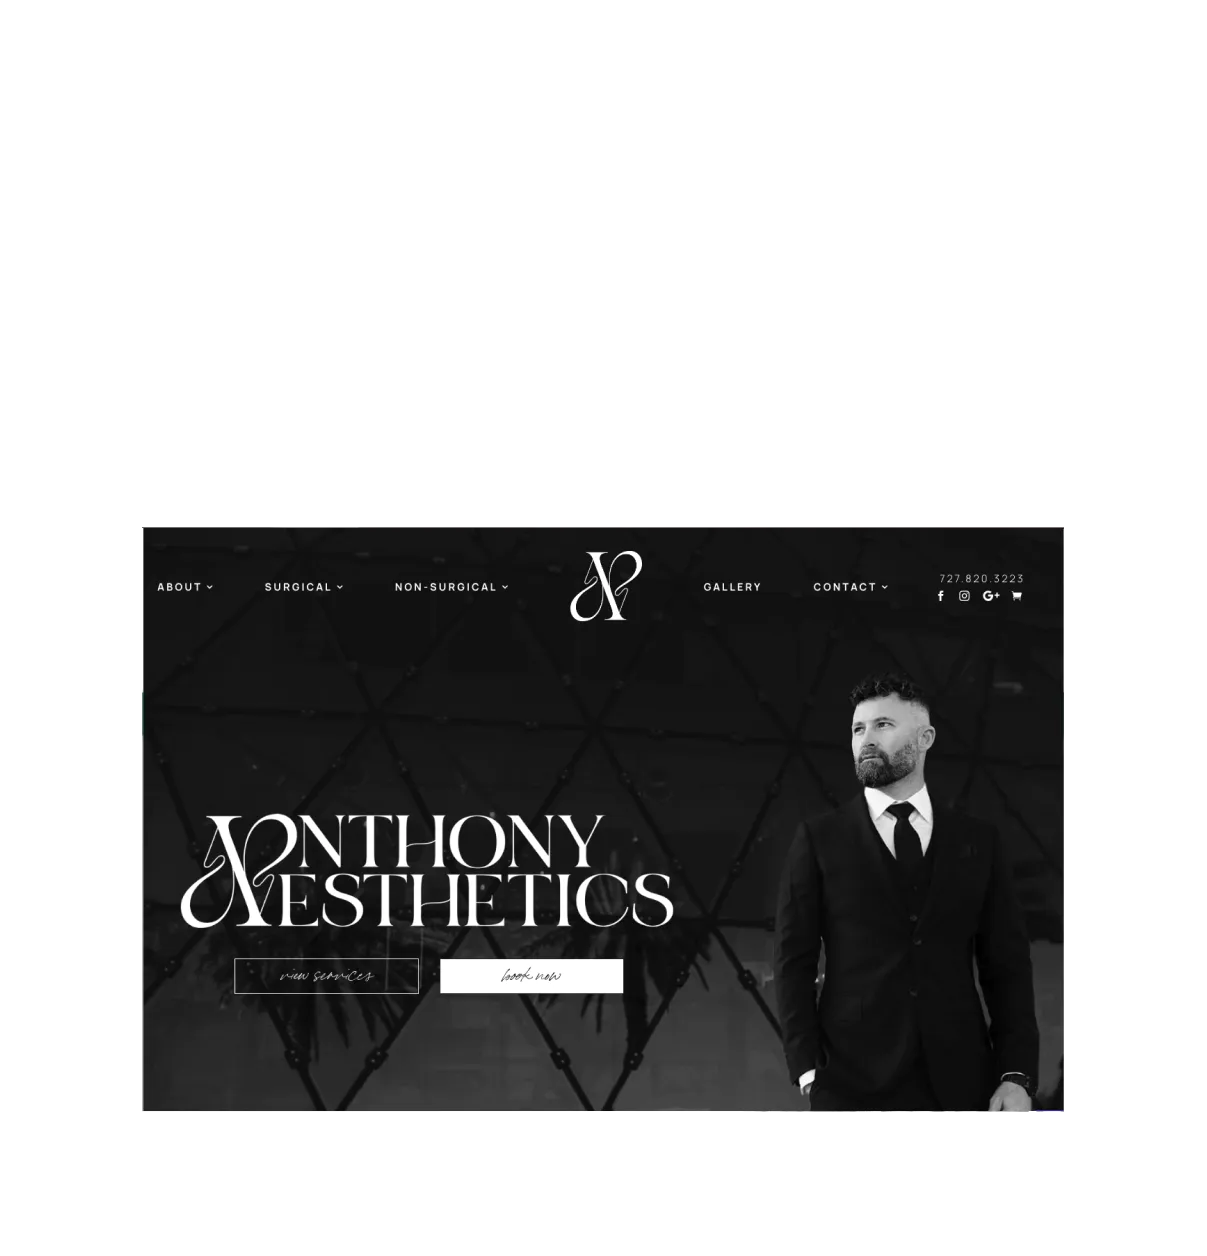 anthony aesthetics website screenshott